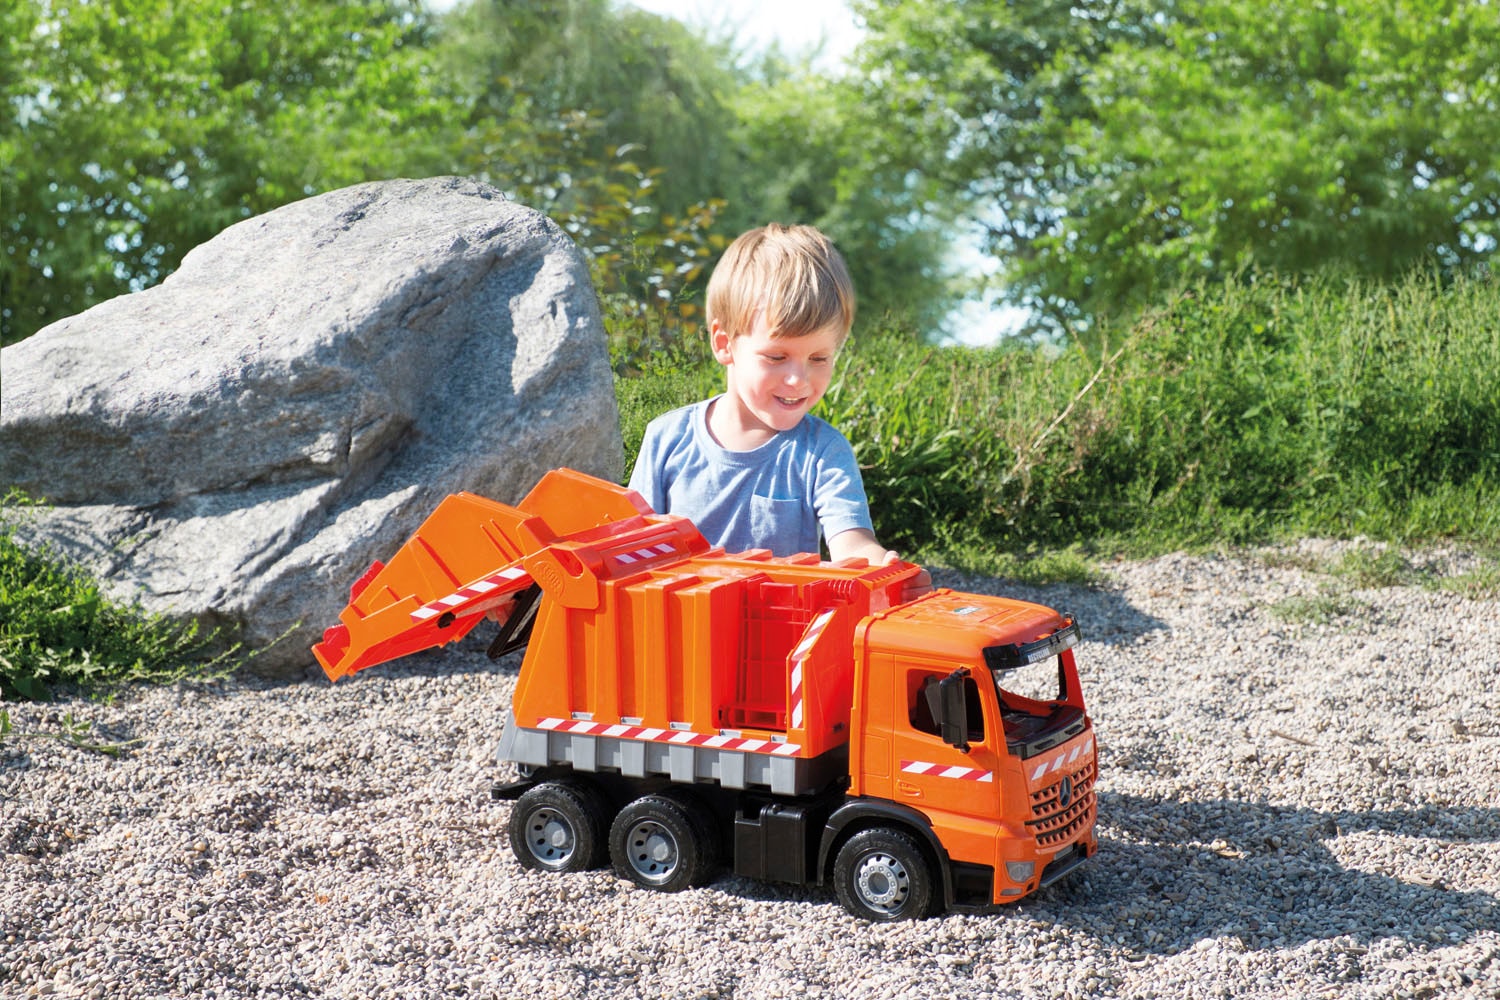 Lena® Spielzeug-Müllwagen »Giga Trucks, Arocs«, Made in Europe